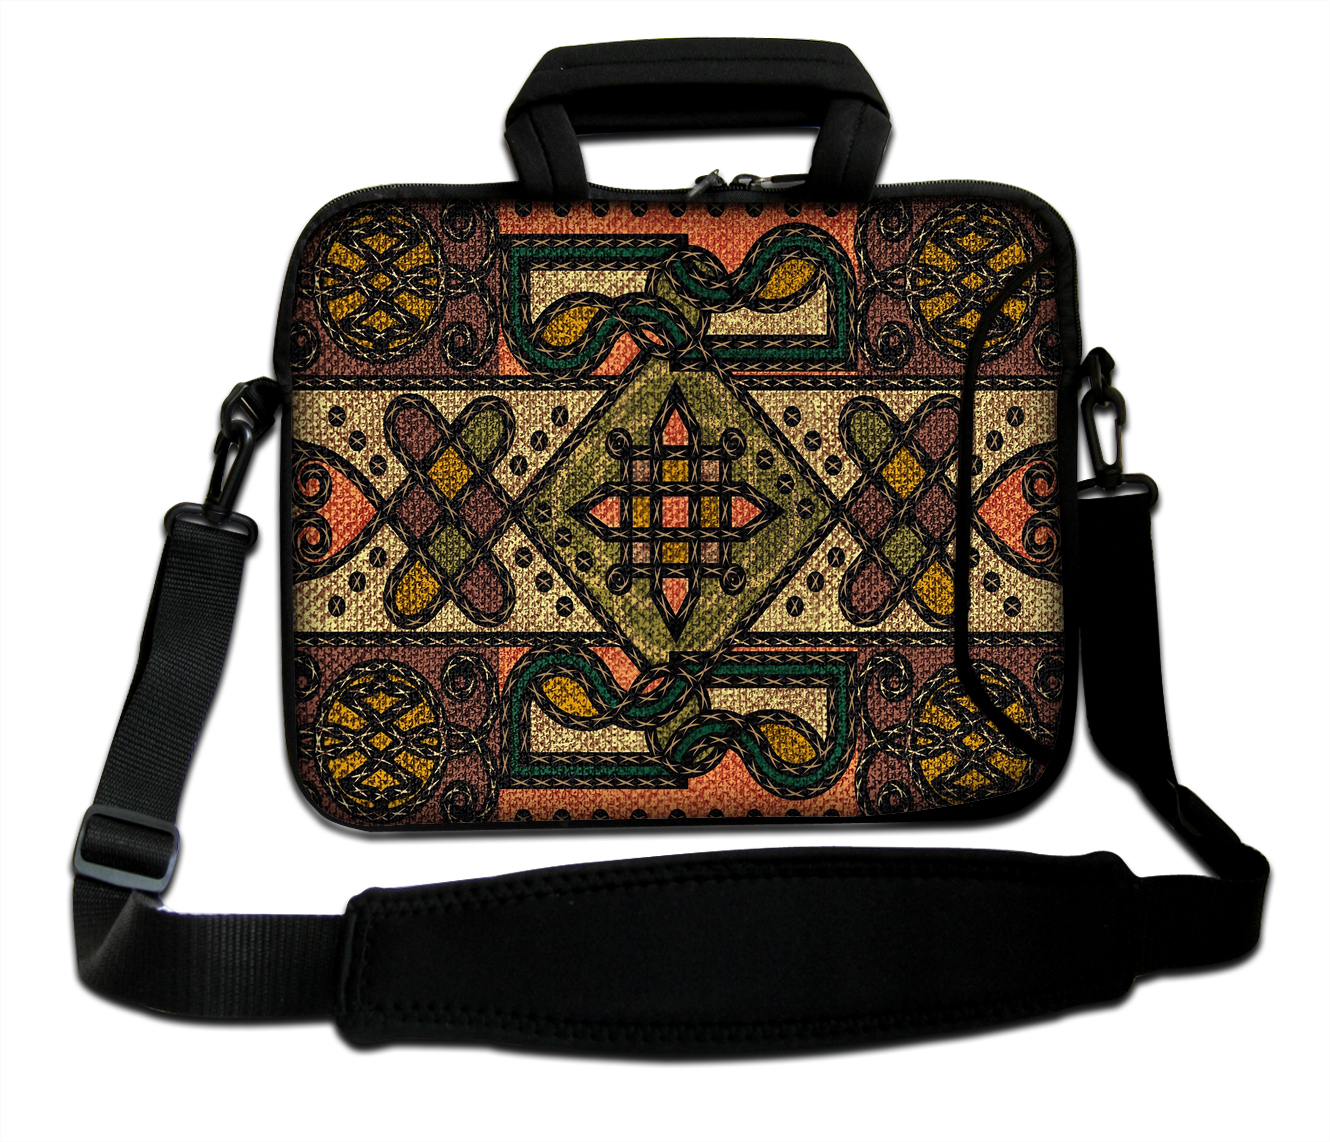 AUPET 15 15.6 inch Neoprene Laptop Sleeve Bag Carrying Case with Outside Handle and Adjustable Shoulder Strap & External Side Po